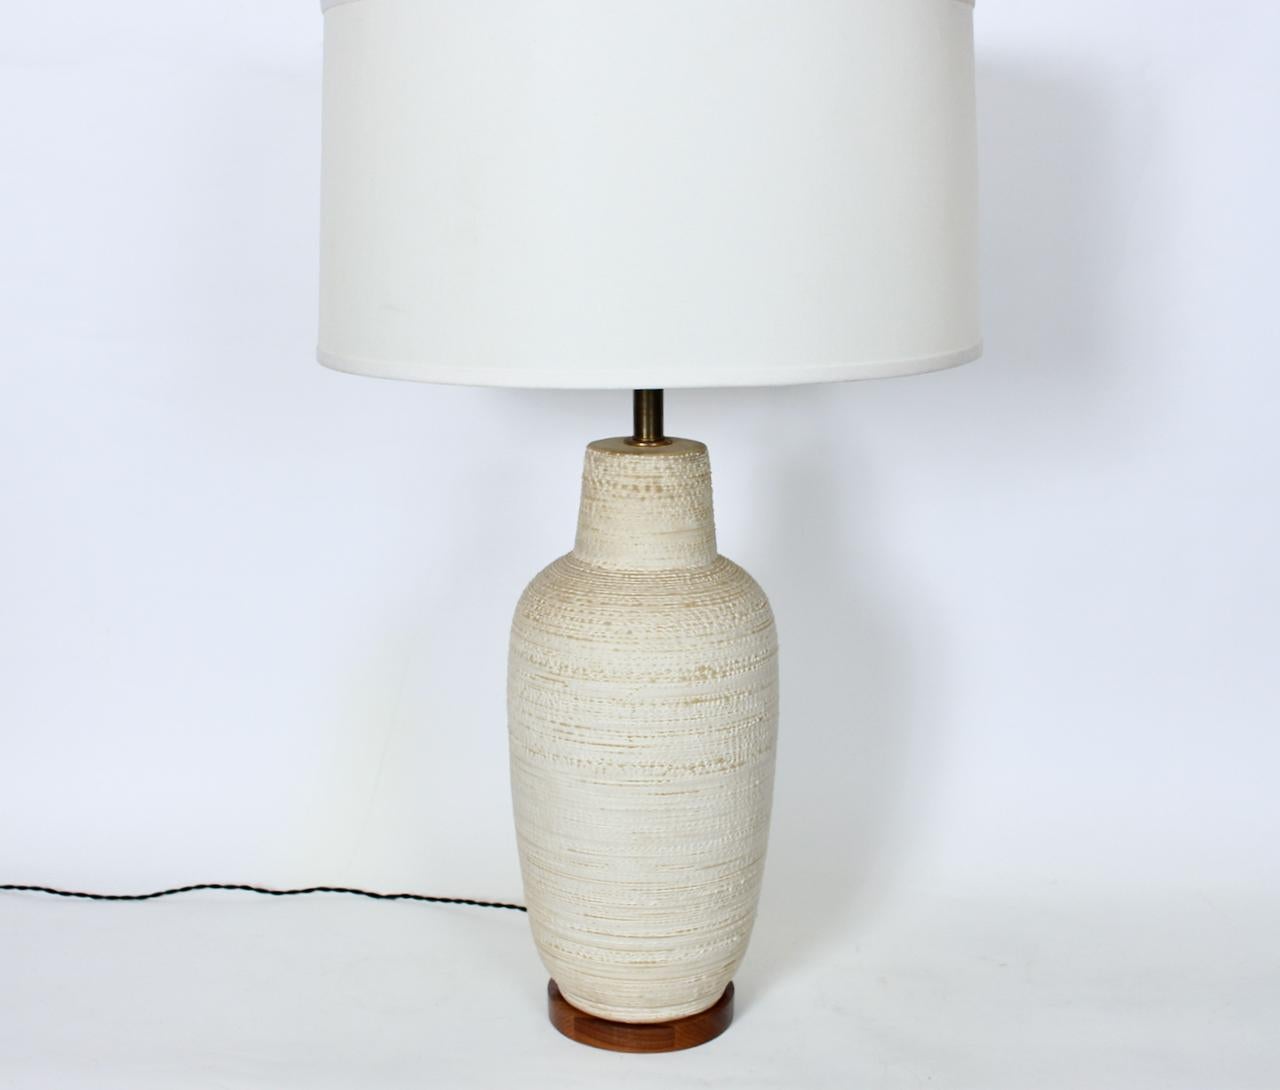 Substantial Design-Technics Warm Cream Glaze Textured Pottery Table Lamp, 1950's For Sale 11